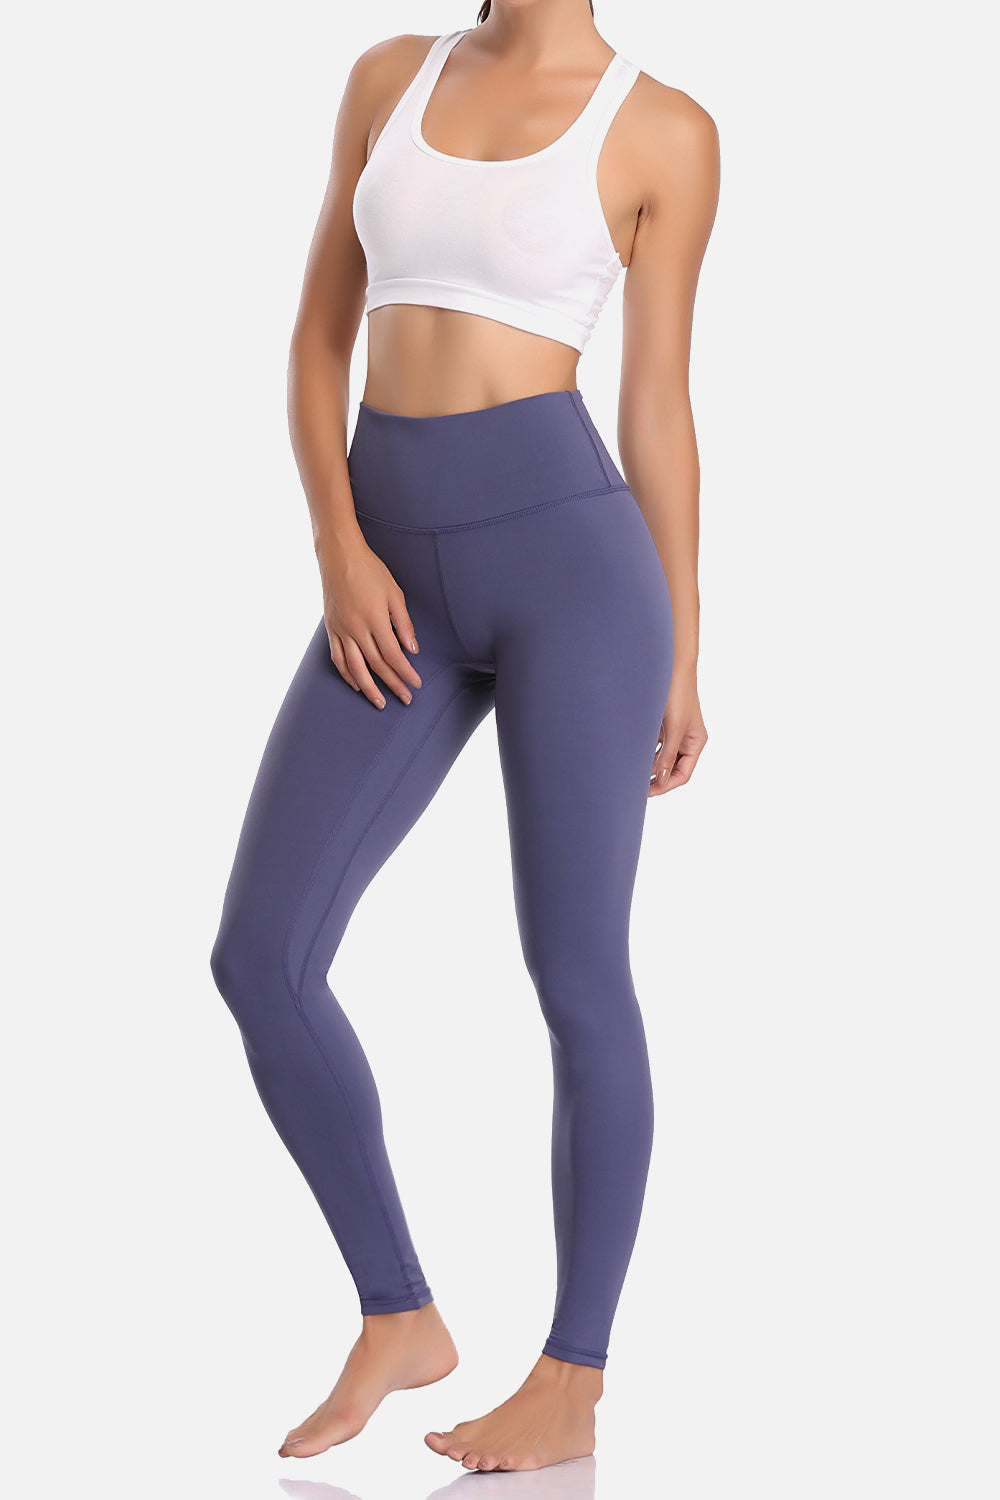 Colorfulkoala Women's Buttery Soft High Waisted Yoga Pants 7/8 Length  Leggings (M - ShopStyle Trousers